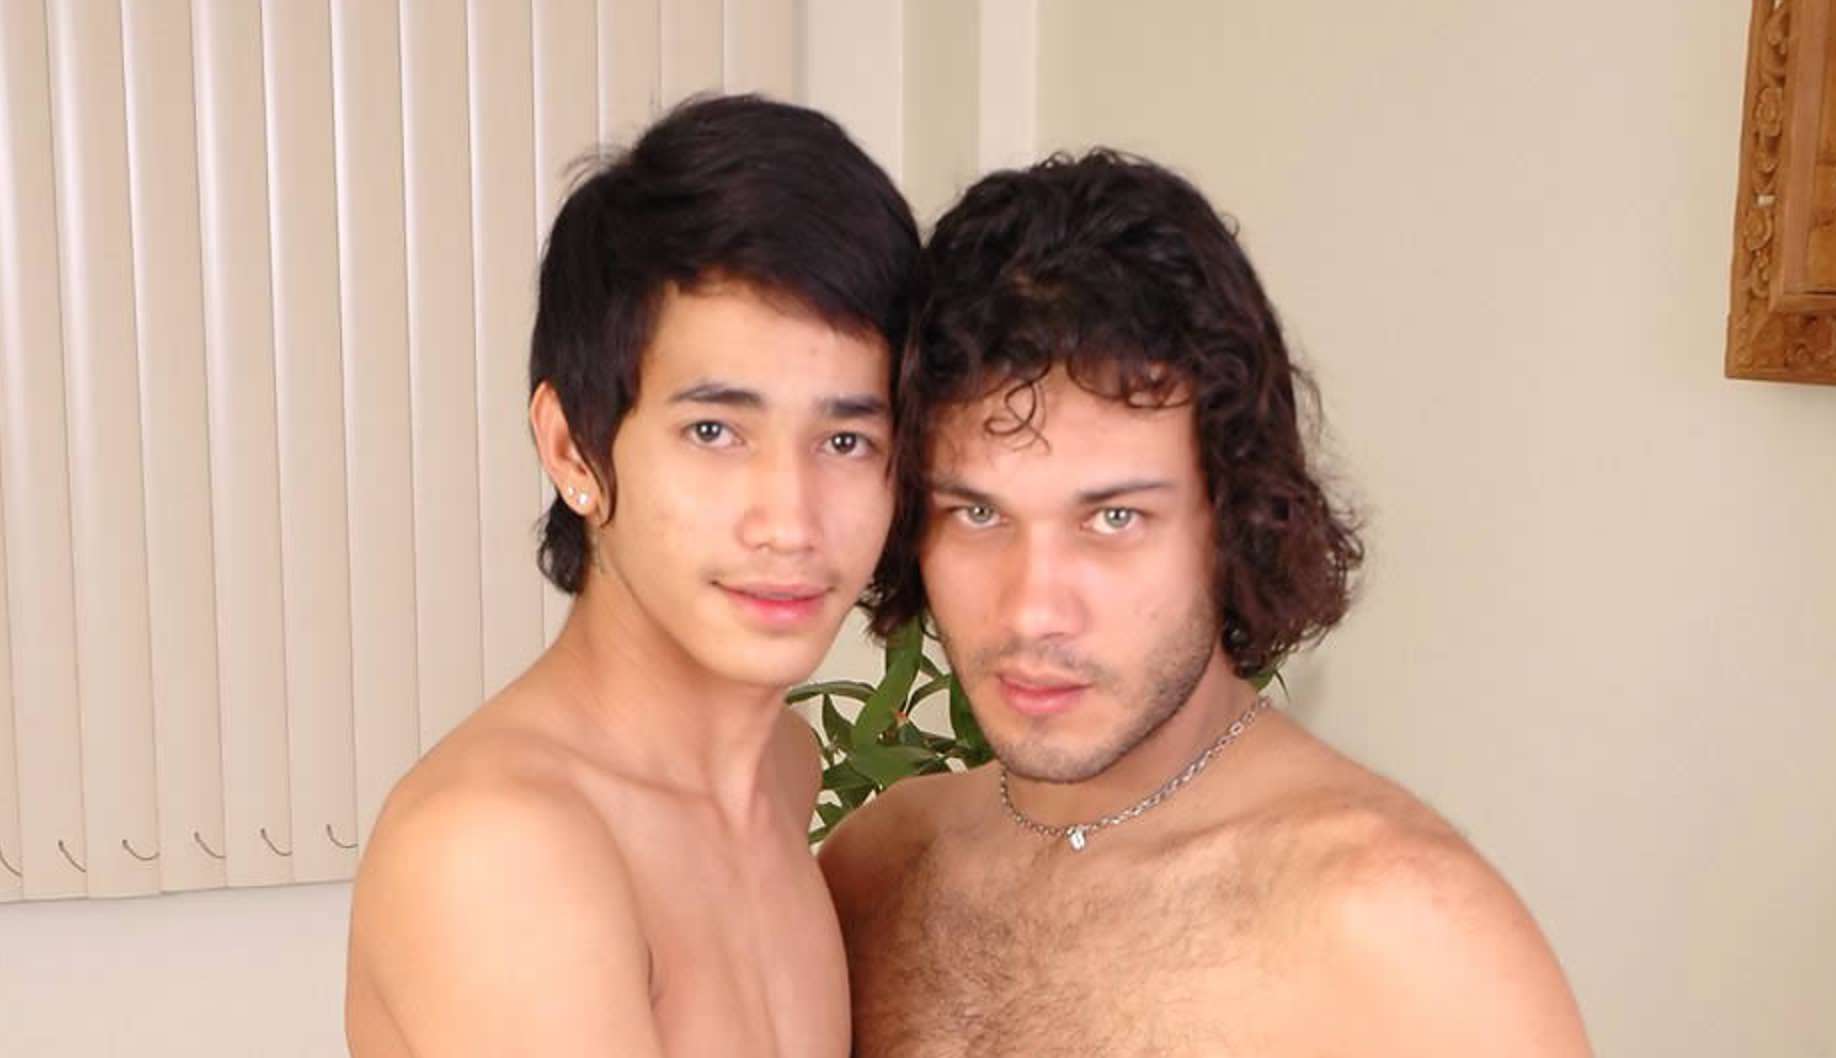 Gay Webcam Sites – Where Fun and Fantasy Meet!